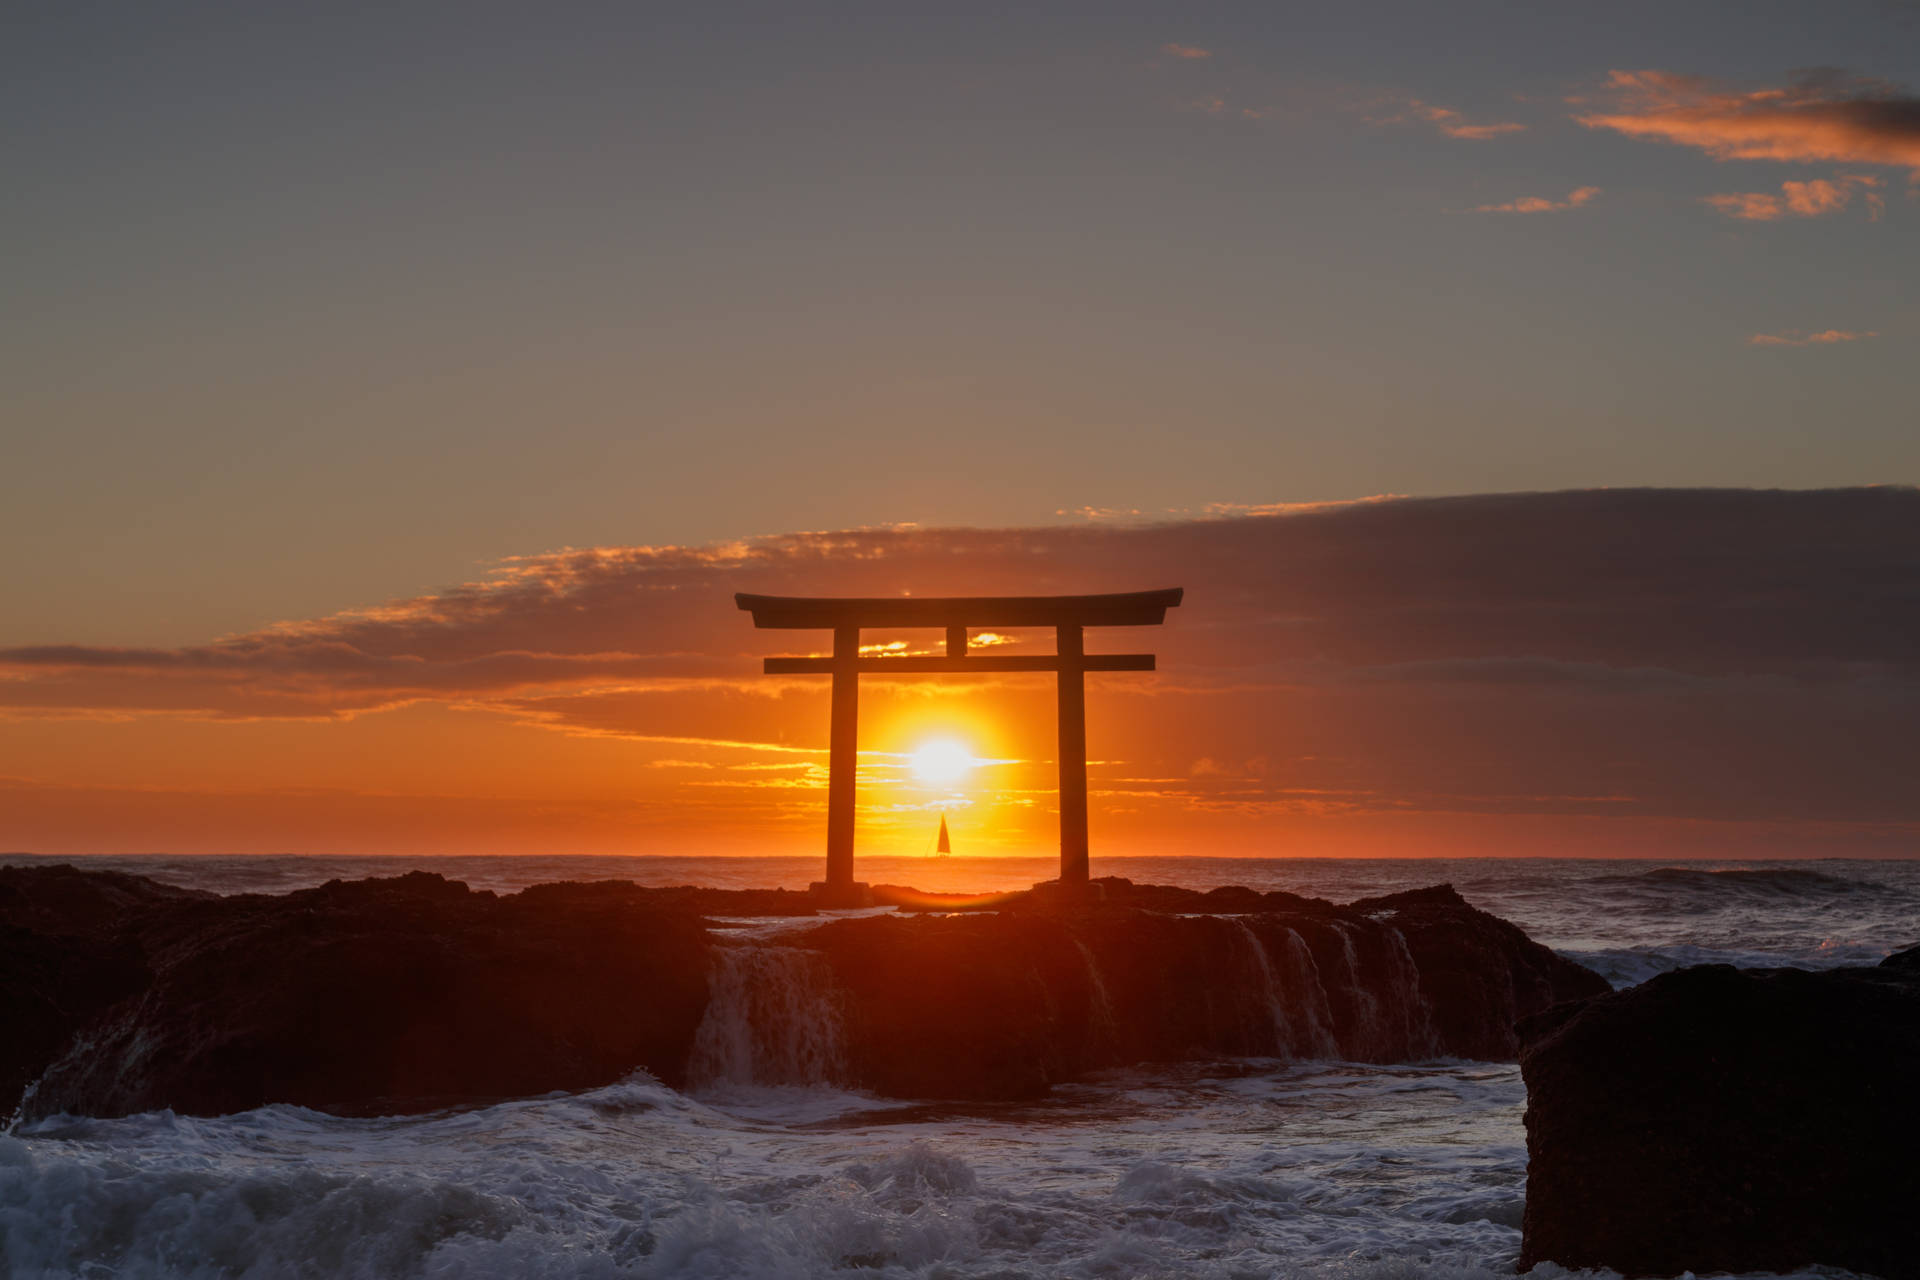 “a Symbol Of Shinto Spirituality - A Unesco World Heritage Site: The Torii Gate At Fushimi Inari Shrine In Japan”